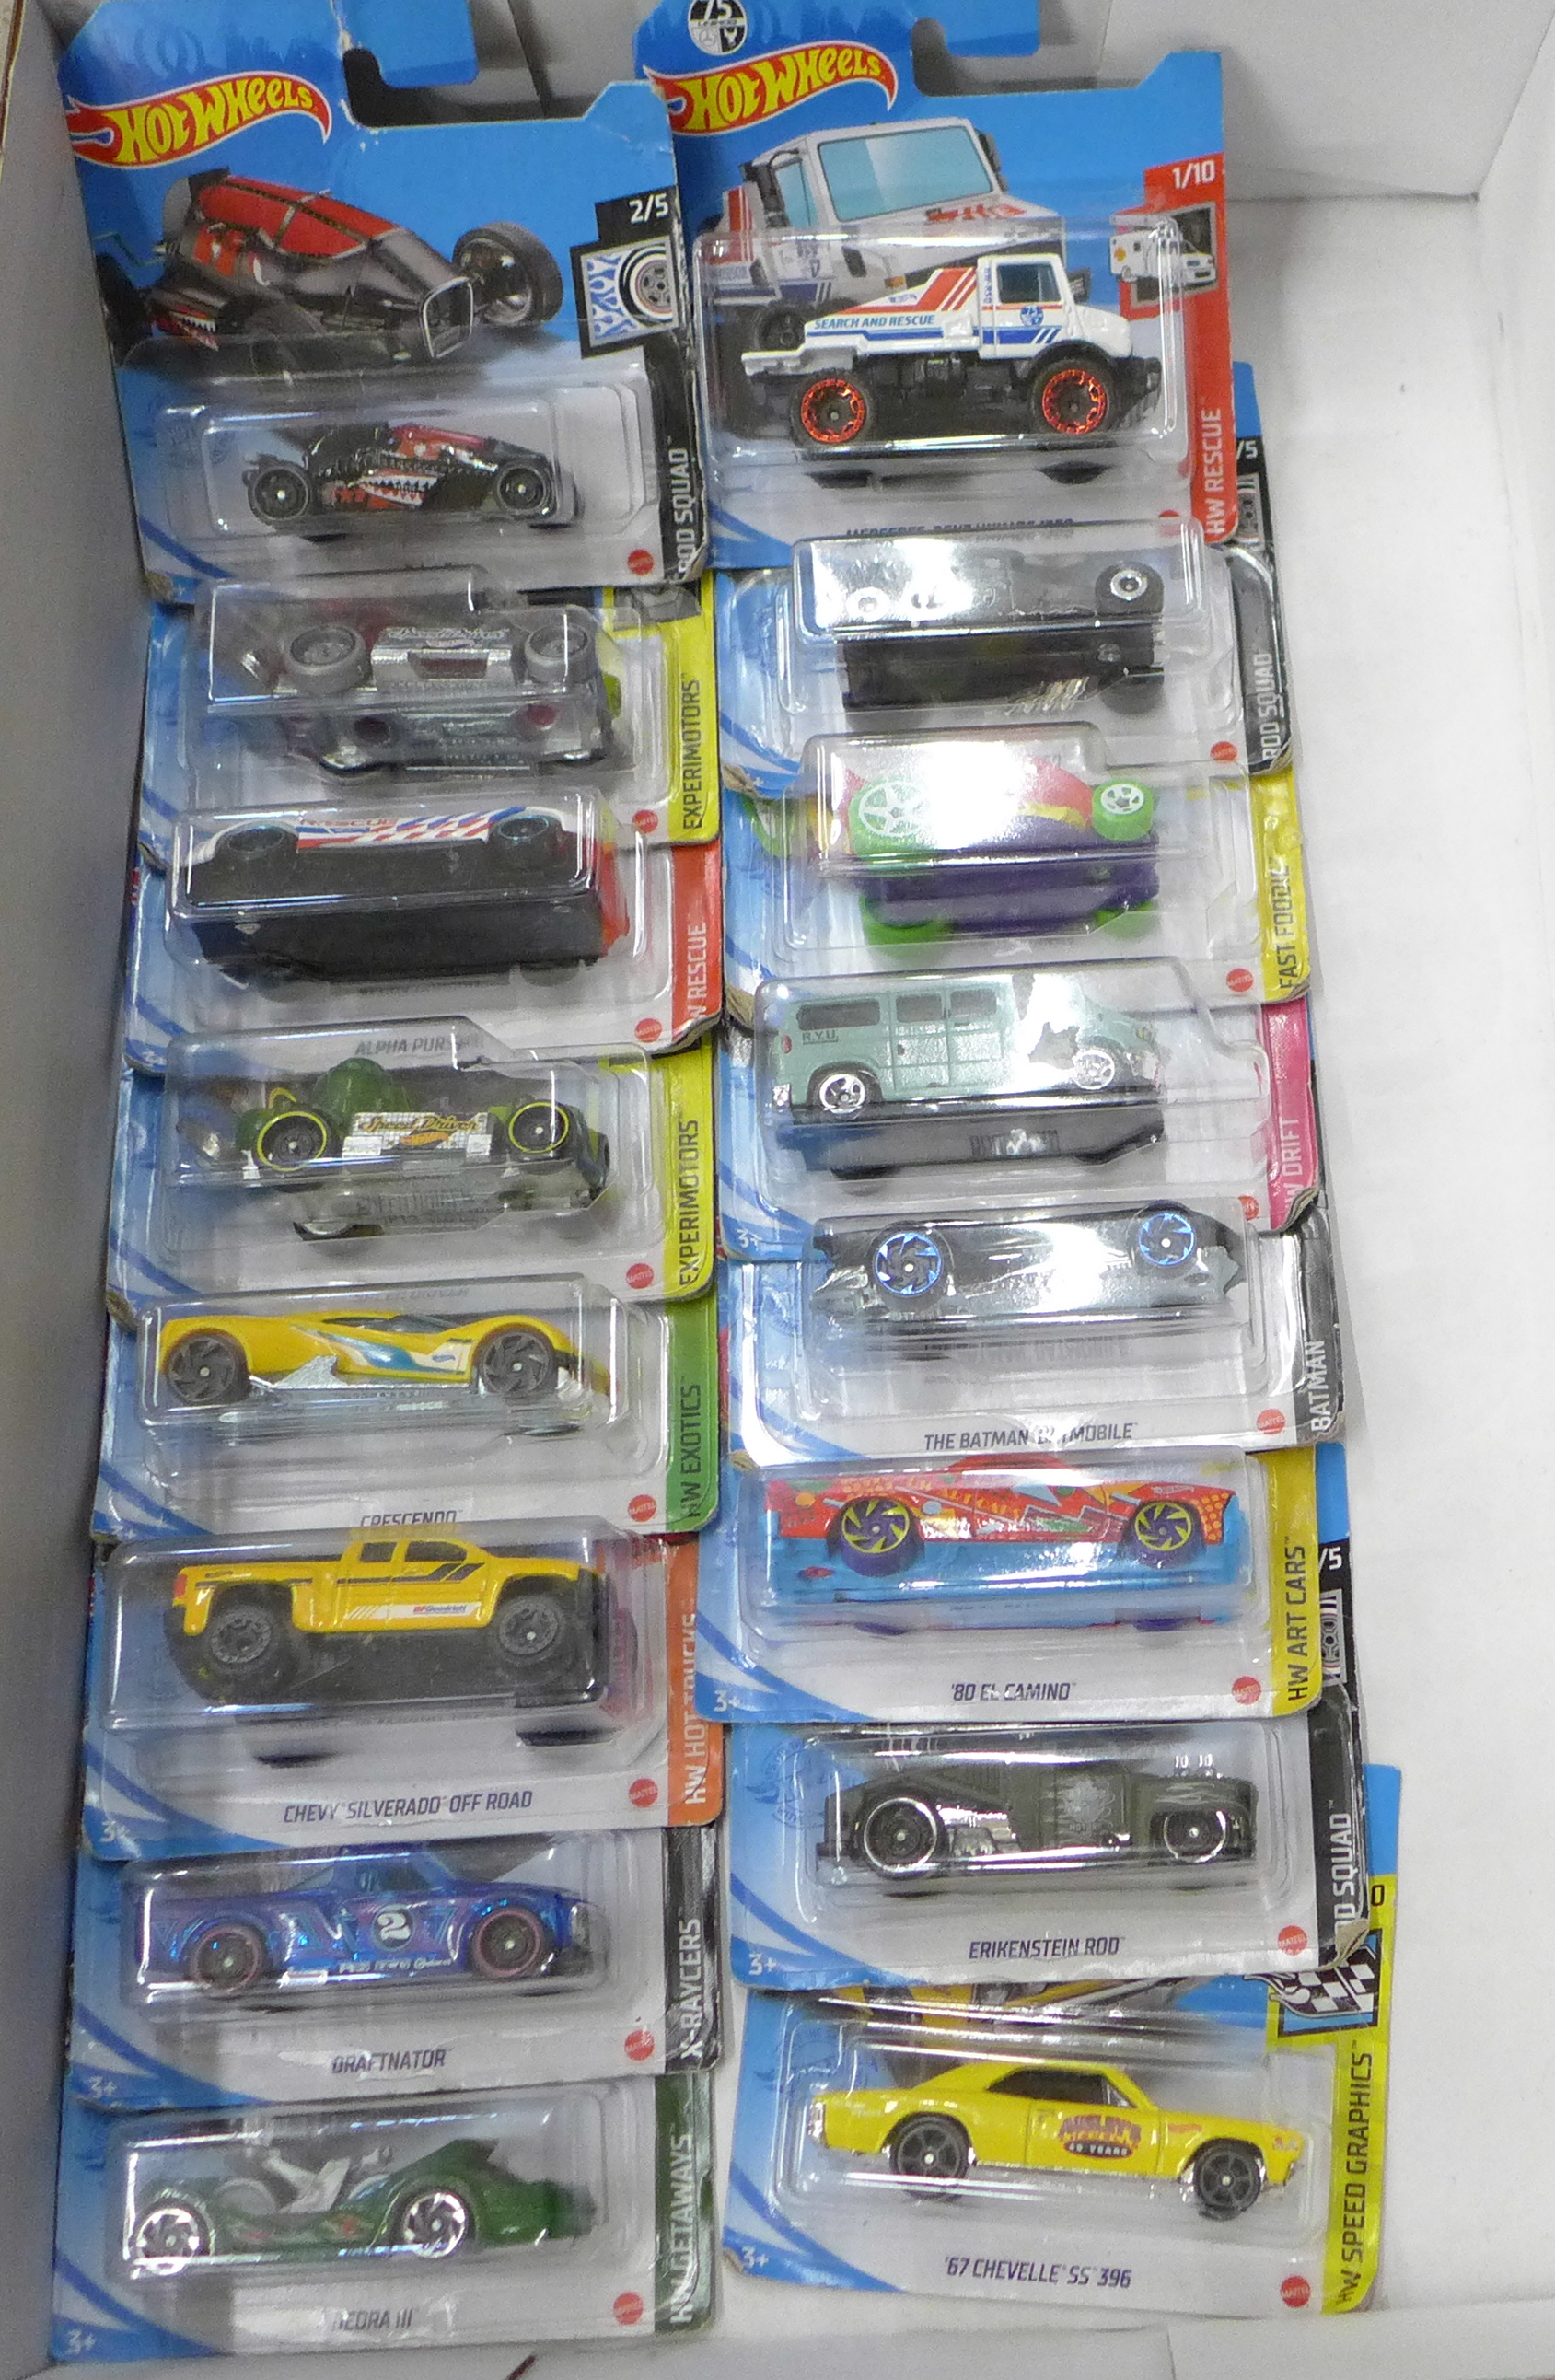 Sixteen Hot Wheels model vehicles in original boxes